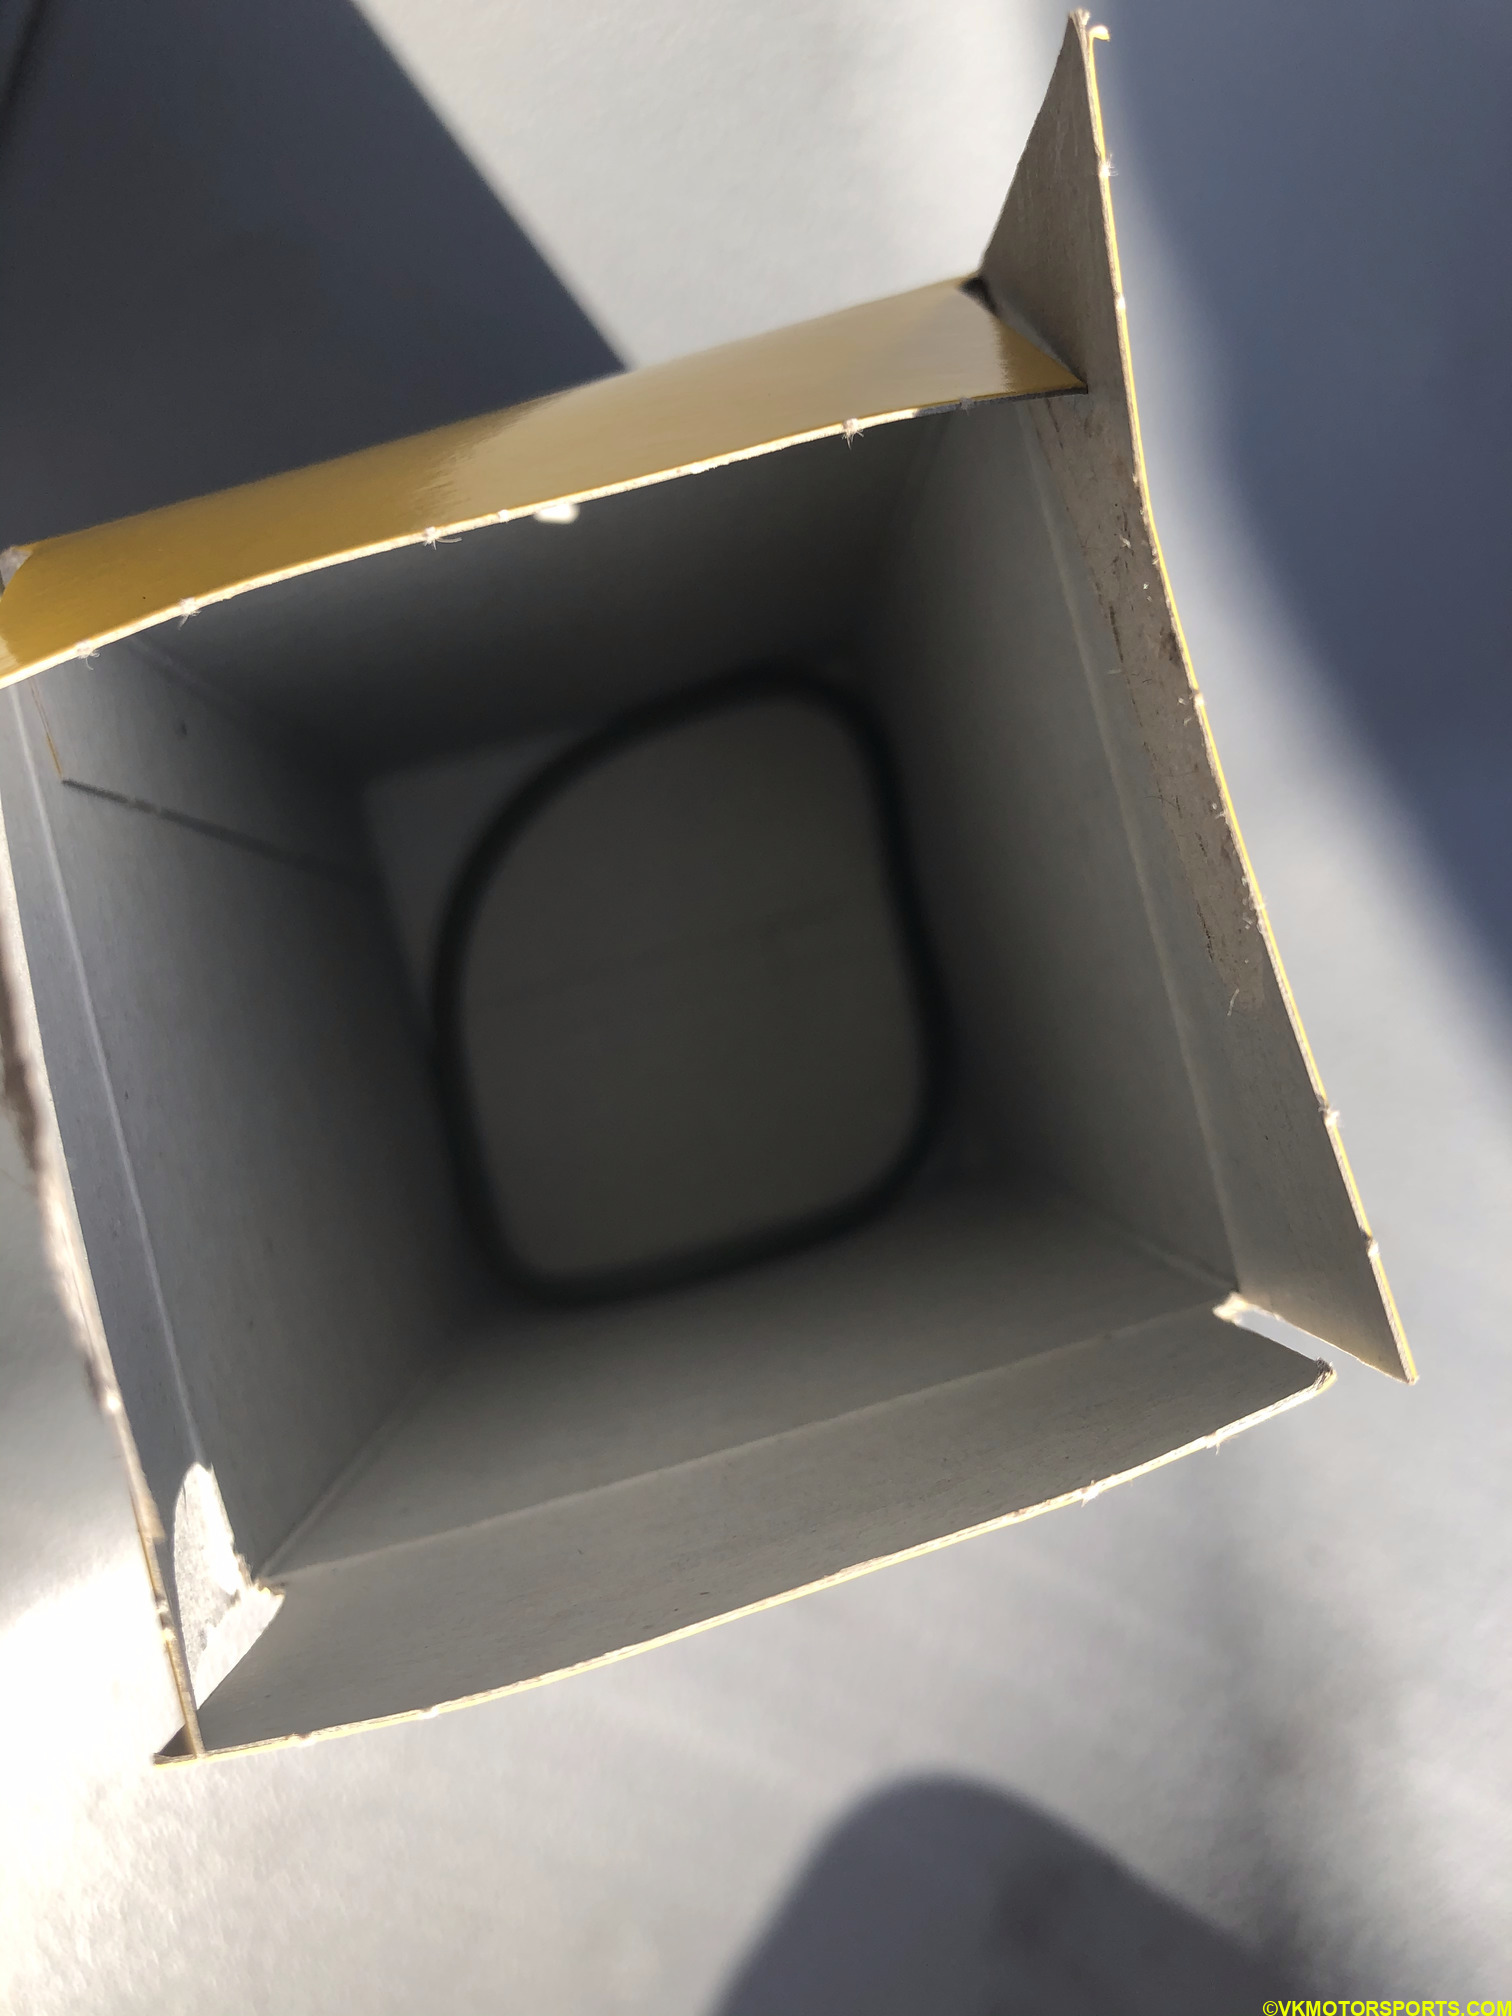 Figure 14. OEM Oil Filter O-Ring (gasket) inside box